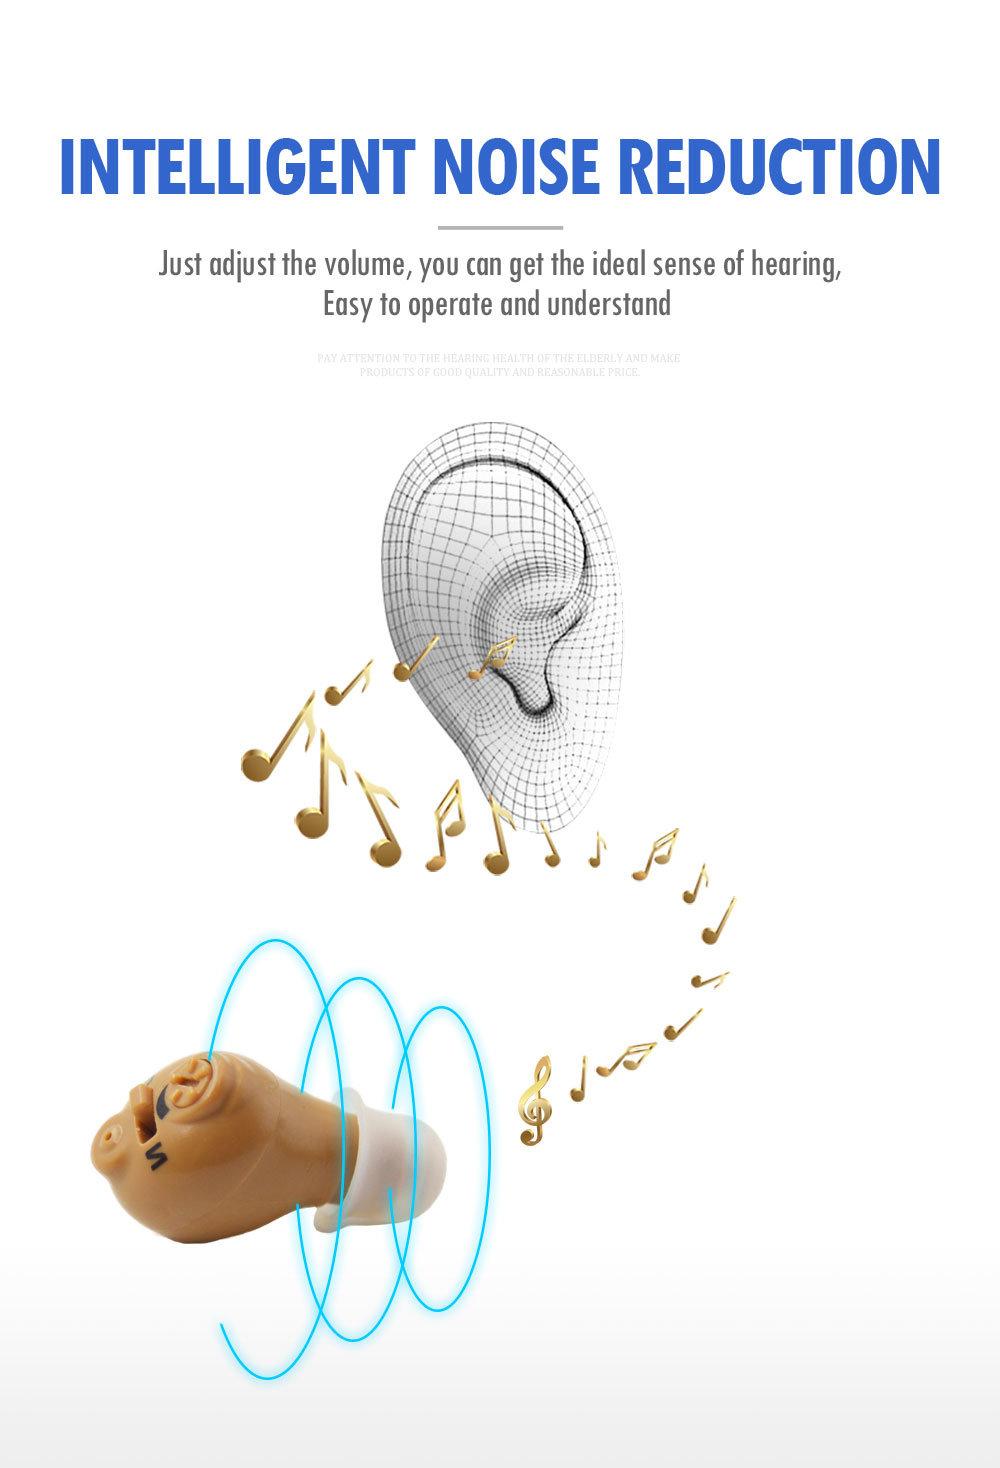 Hearing Aid Aids Mini Rite Reachargeble Sound Emplifie Audiphones